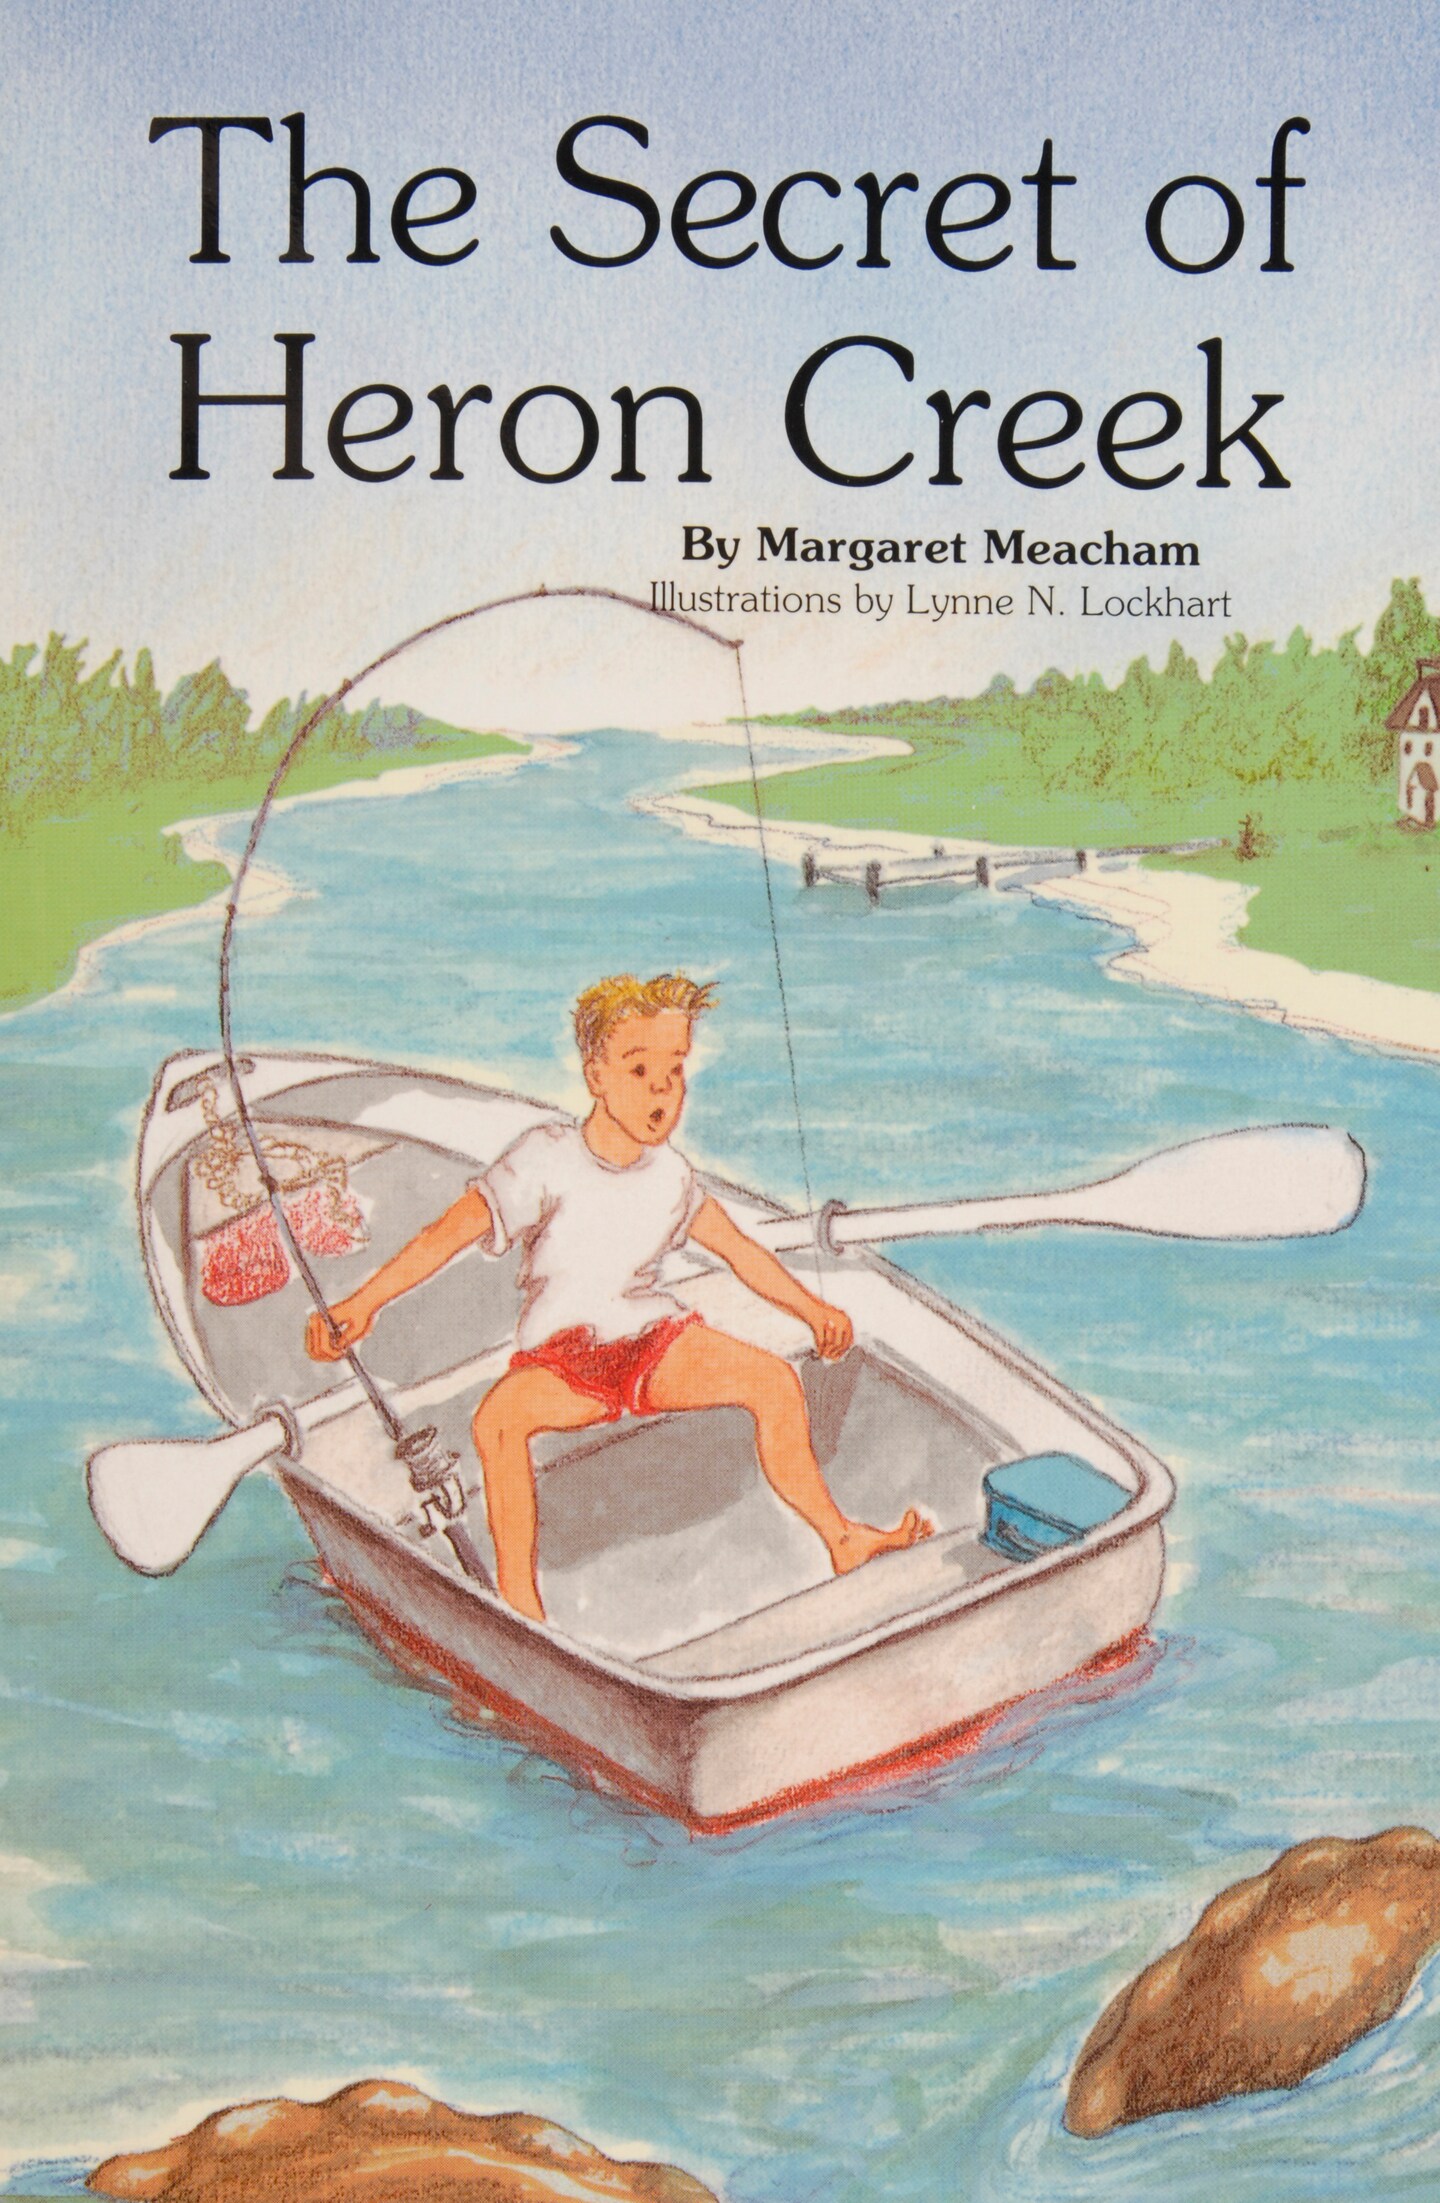 The Secret of Heron Creek